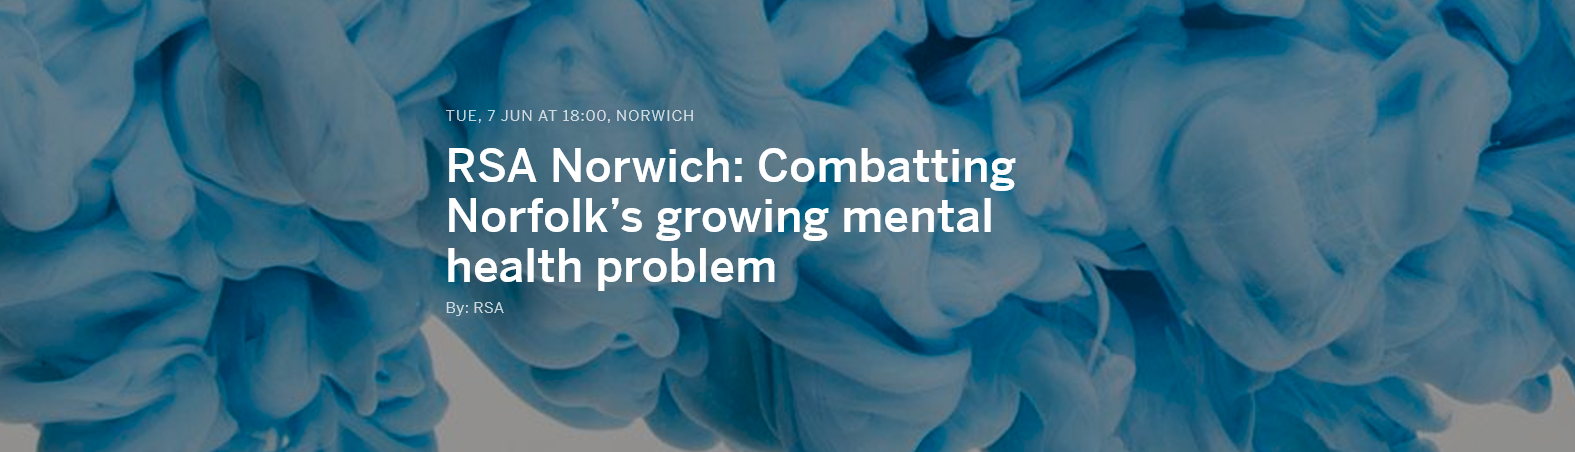 RSA Norwich Combatting Norfolk’s growing mental health problem